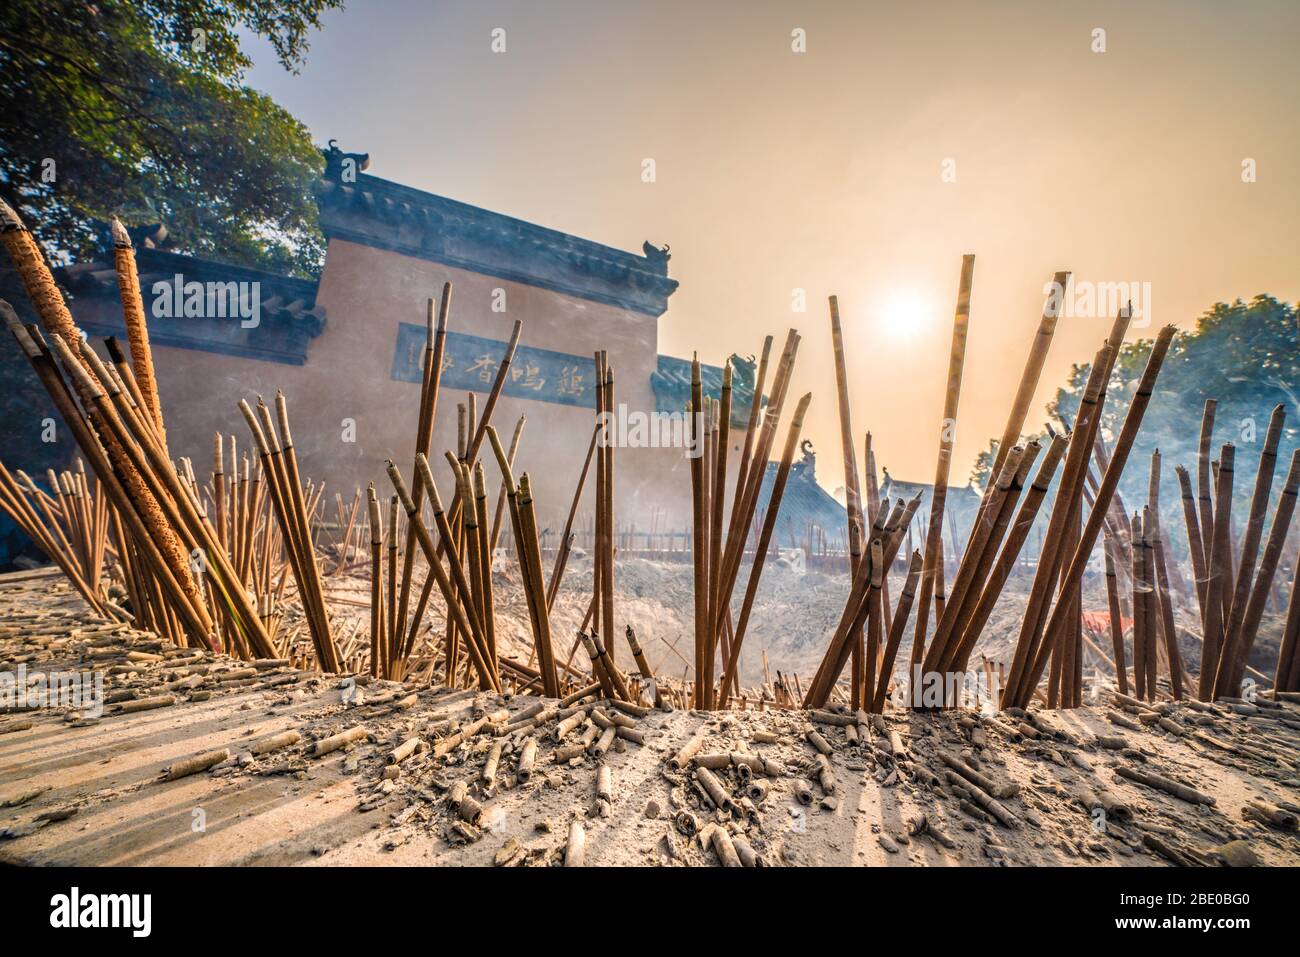 NANJING, CHINA - NOVEMBER 08: Incense sticks burning with the sunset shining through at Jiming buddhist temple on November 08, 2019 in Nanjing Stock Photo